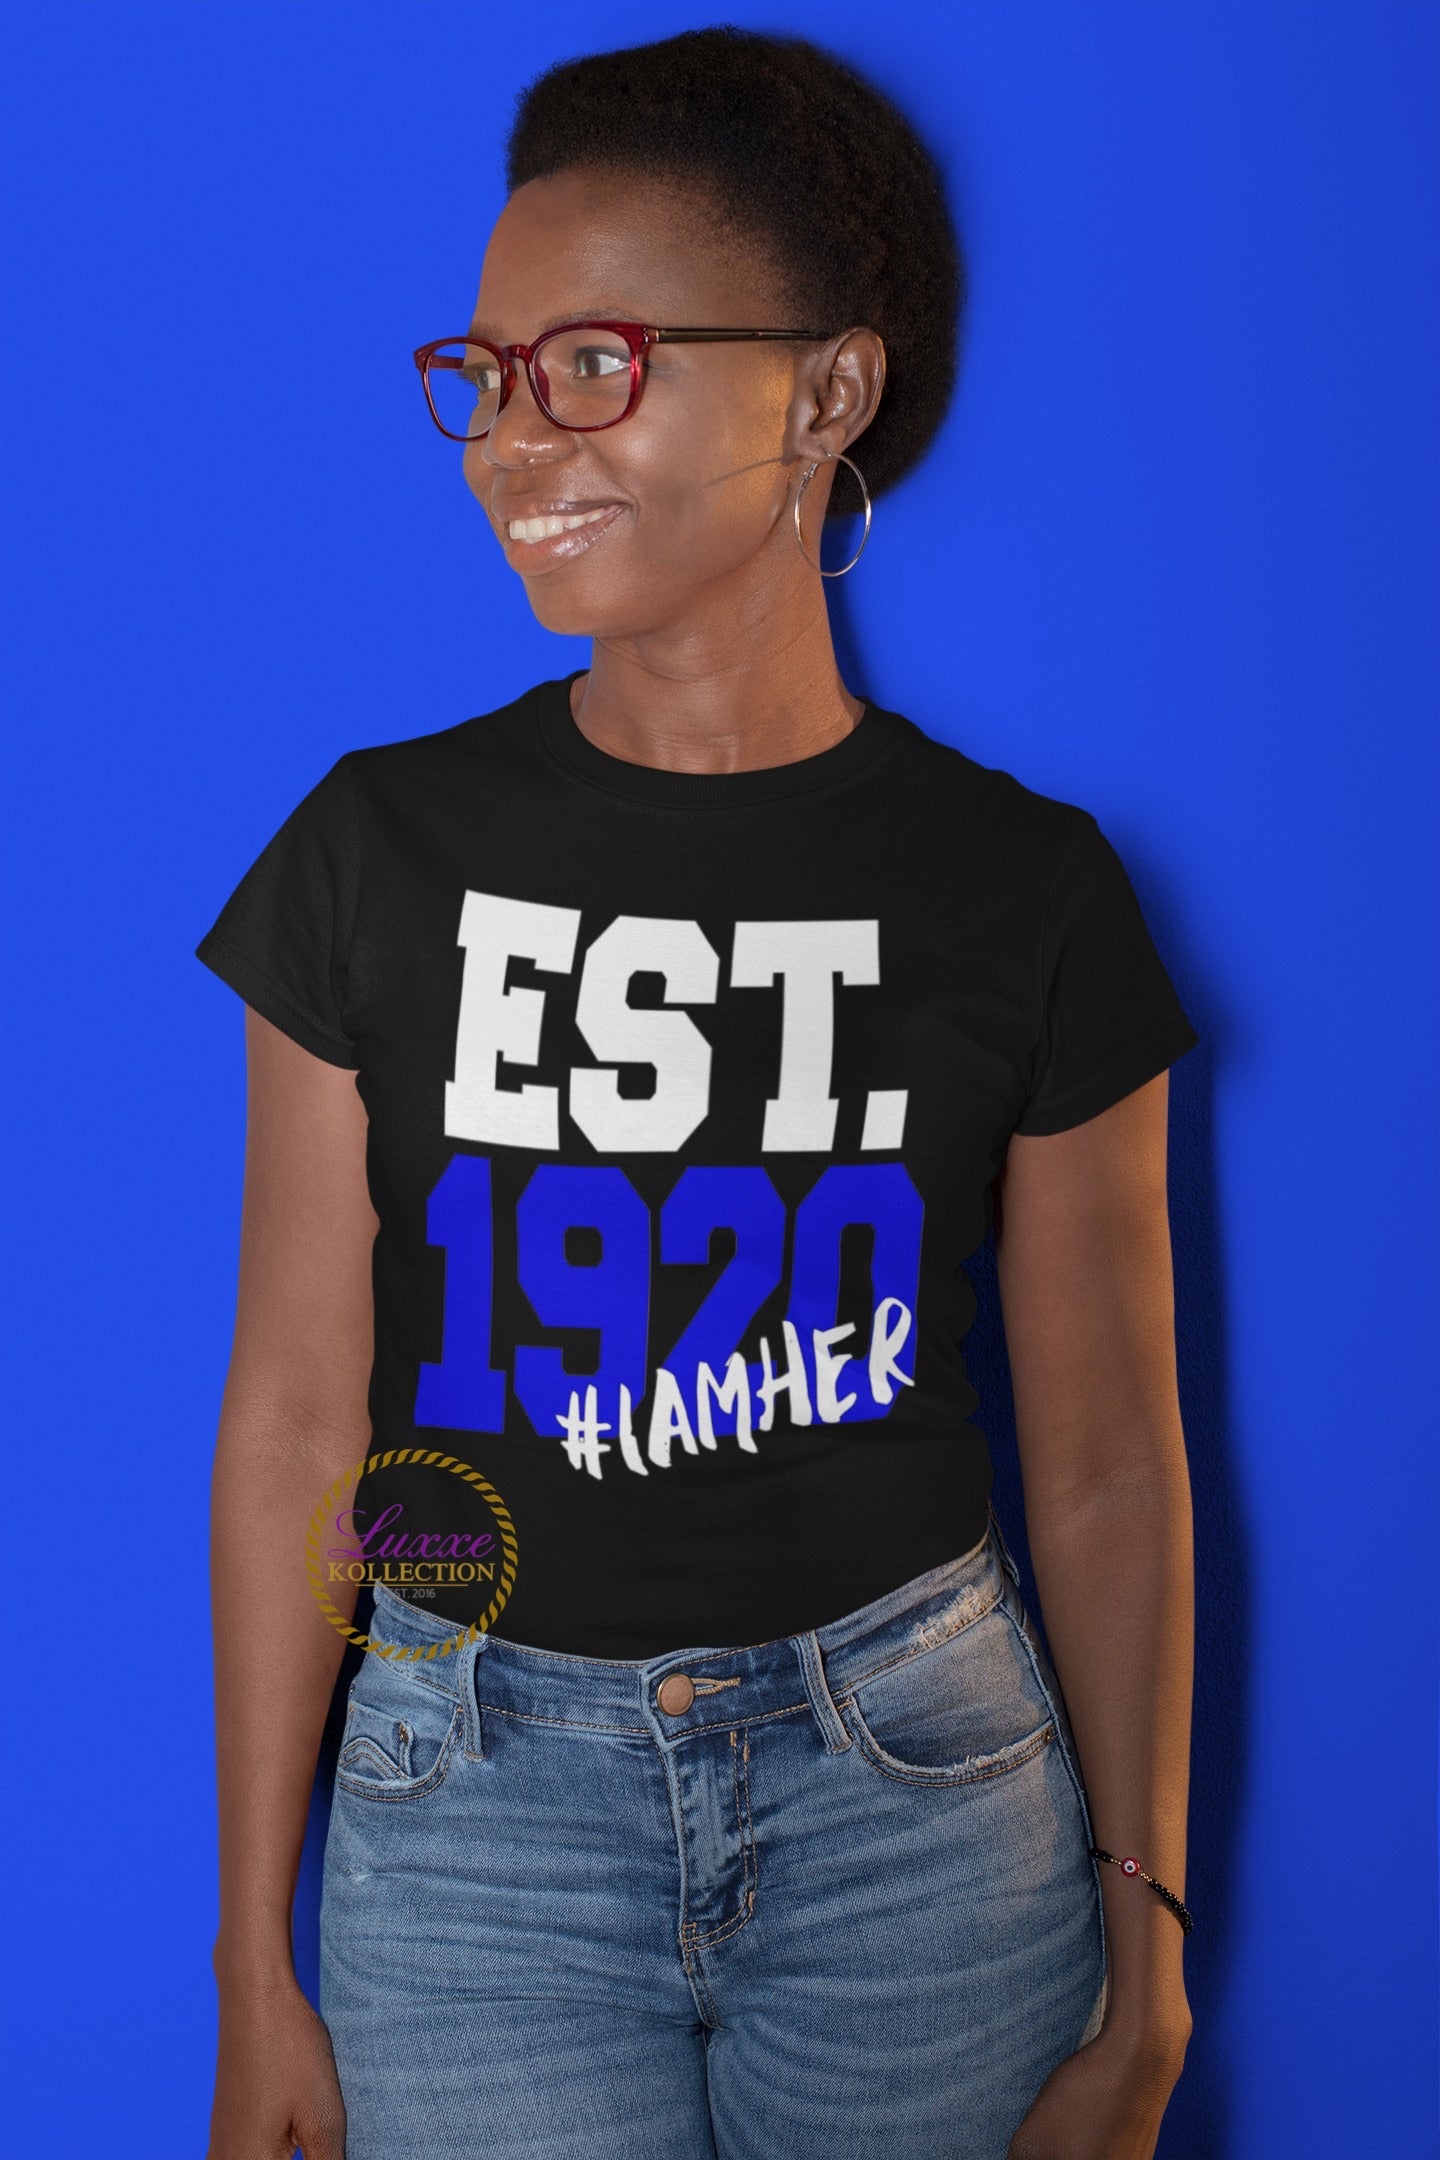 EST. 1920 #IAMHER Zeta Phi Beta T-shirt